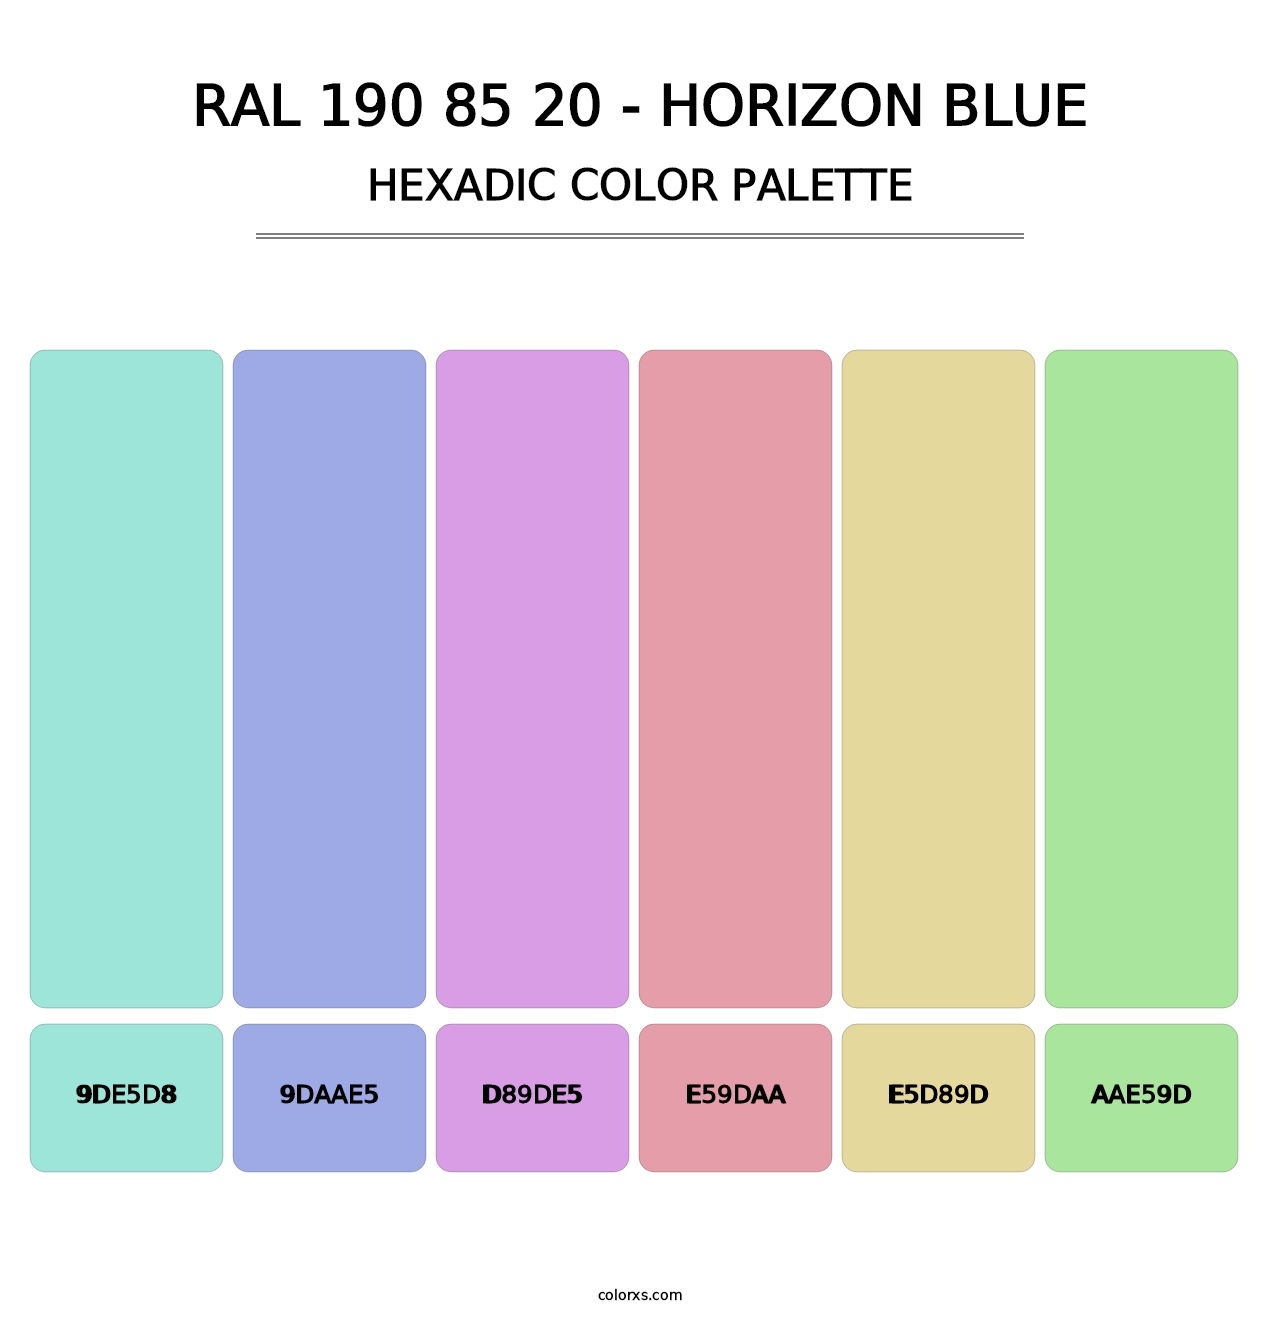 RAL 190 85 20 - Horizon Blue - Hexadic Color Palette